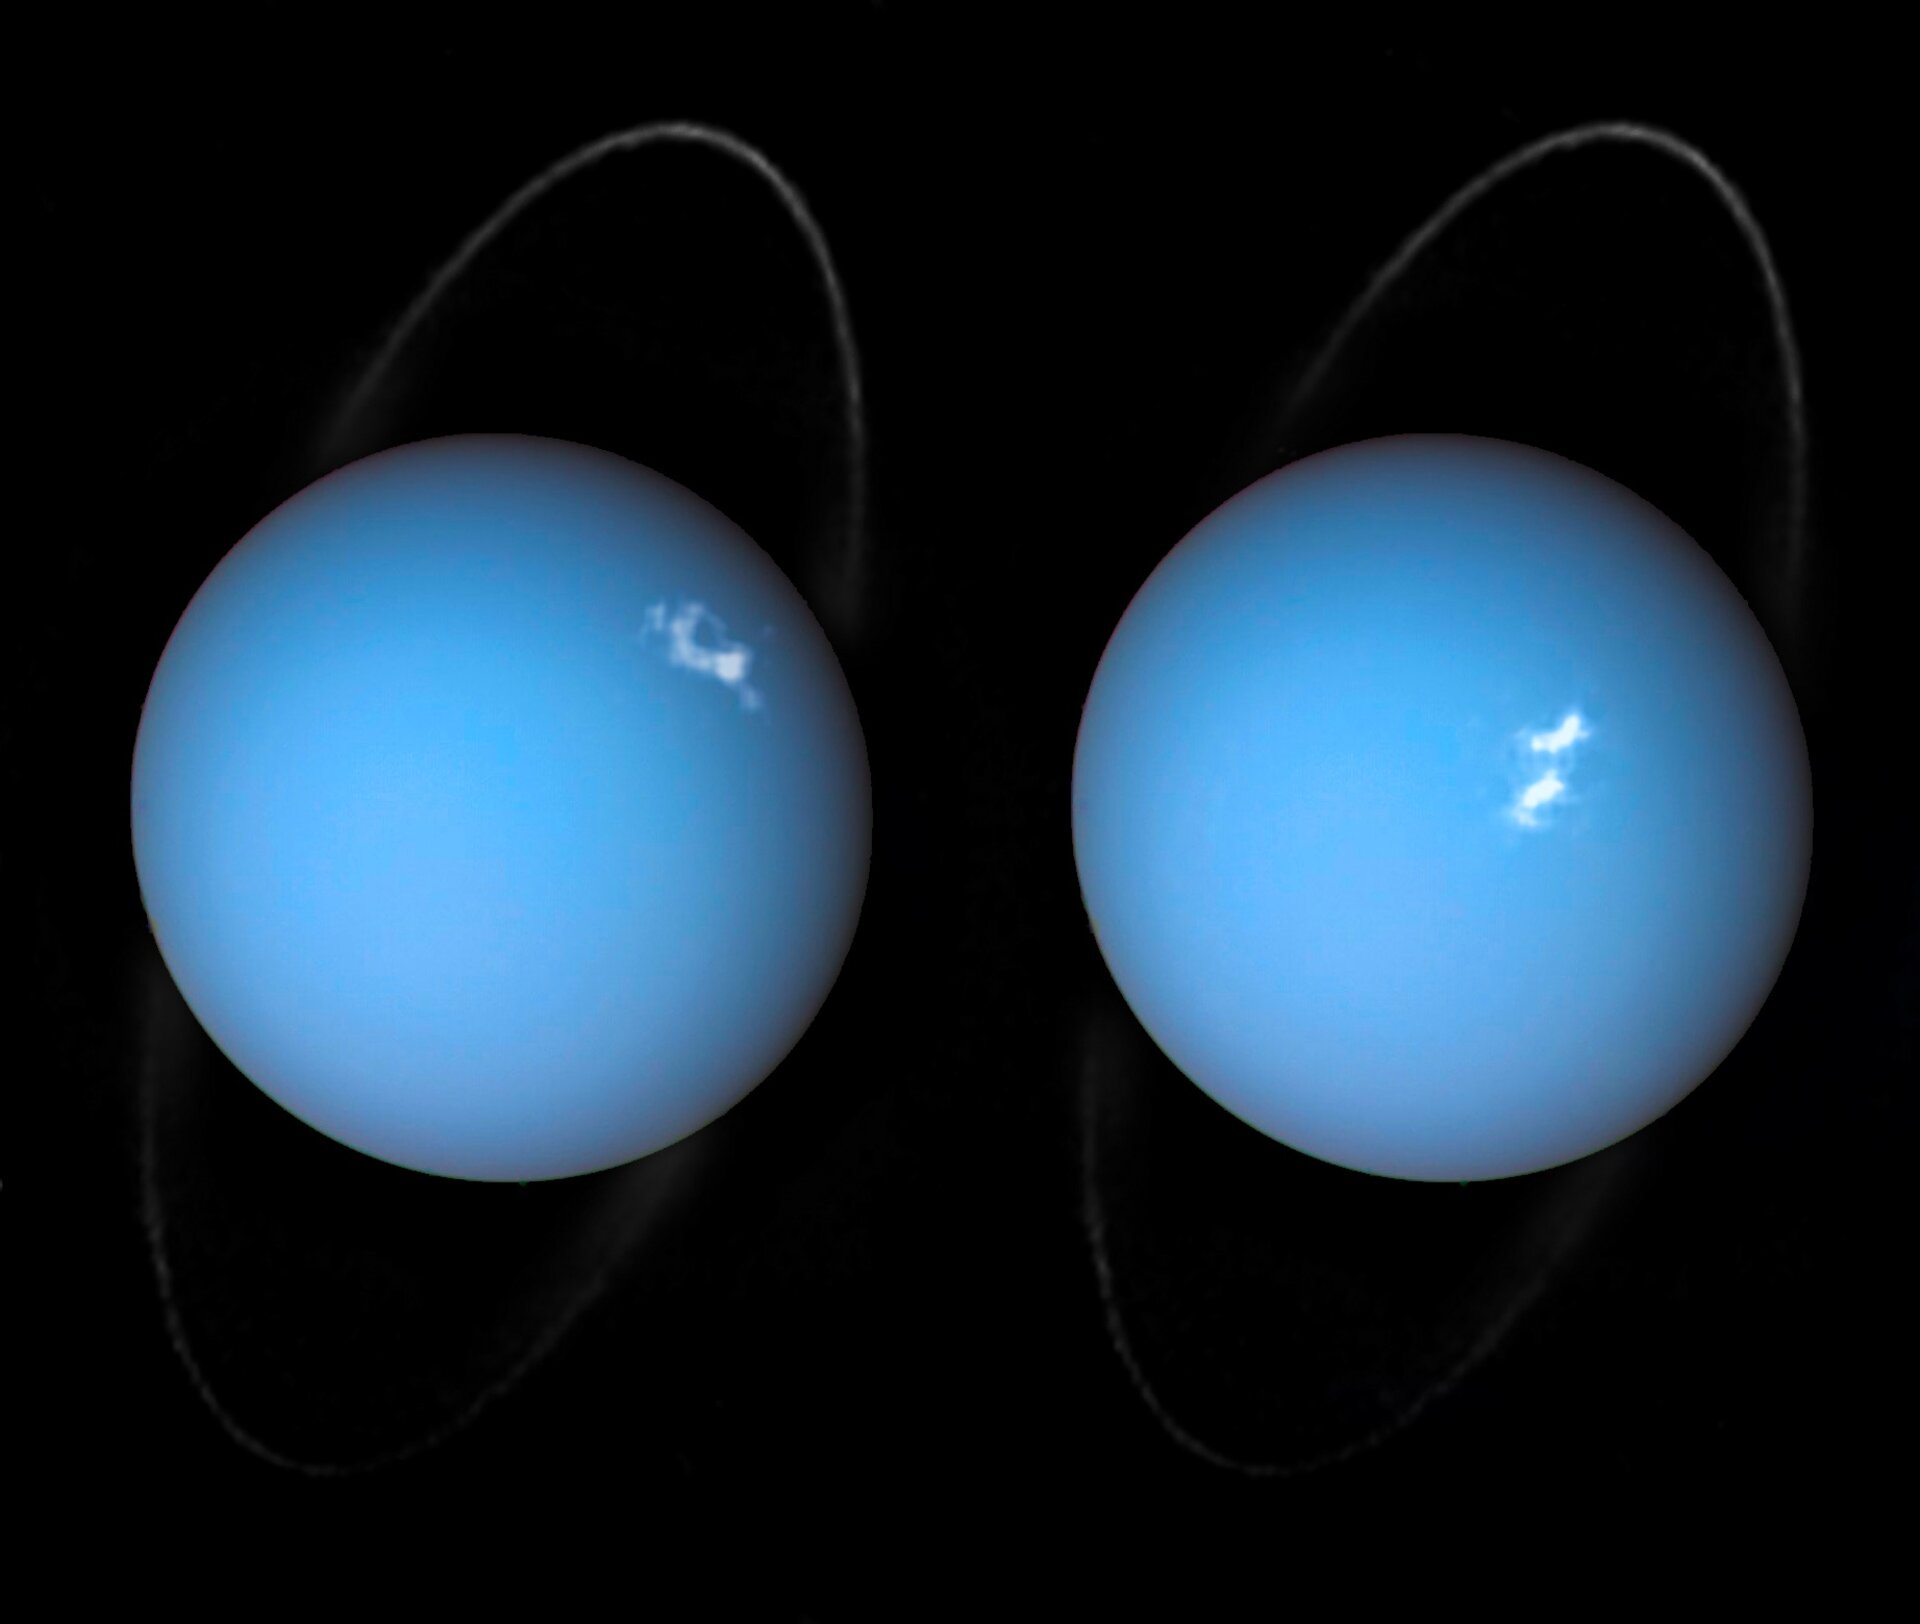 Polar lights on Uranus